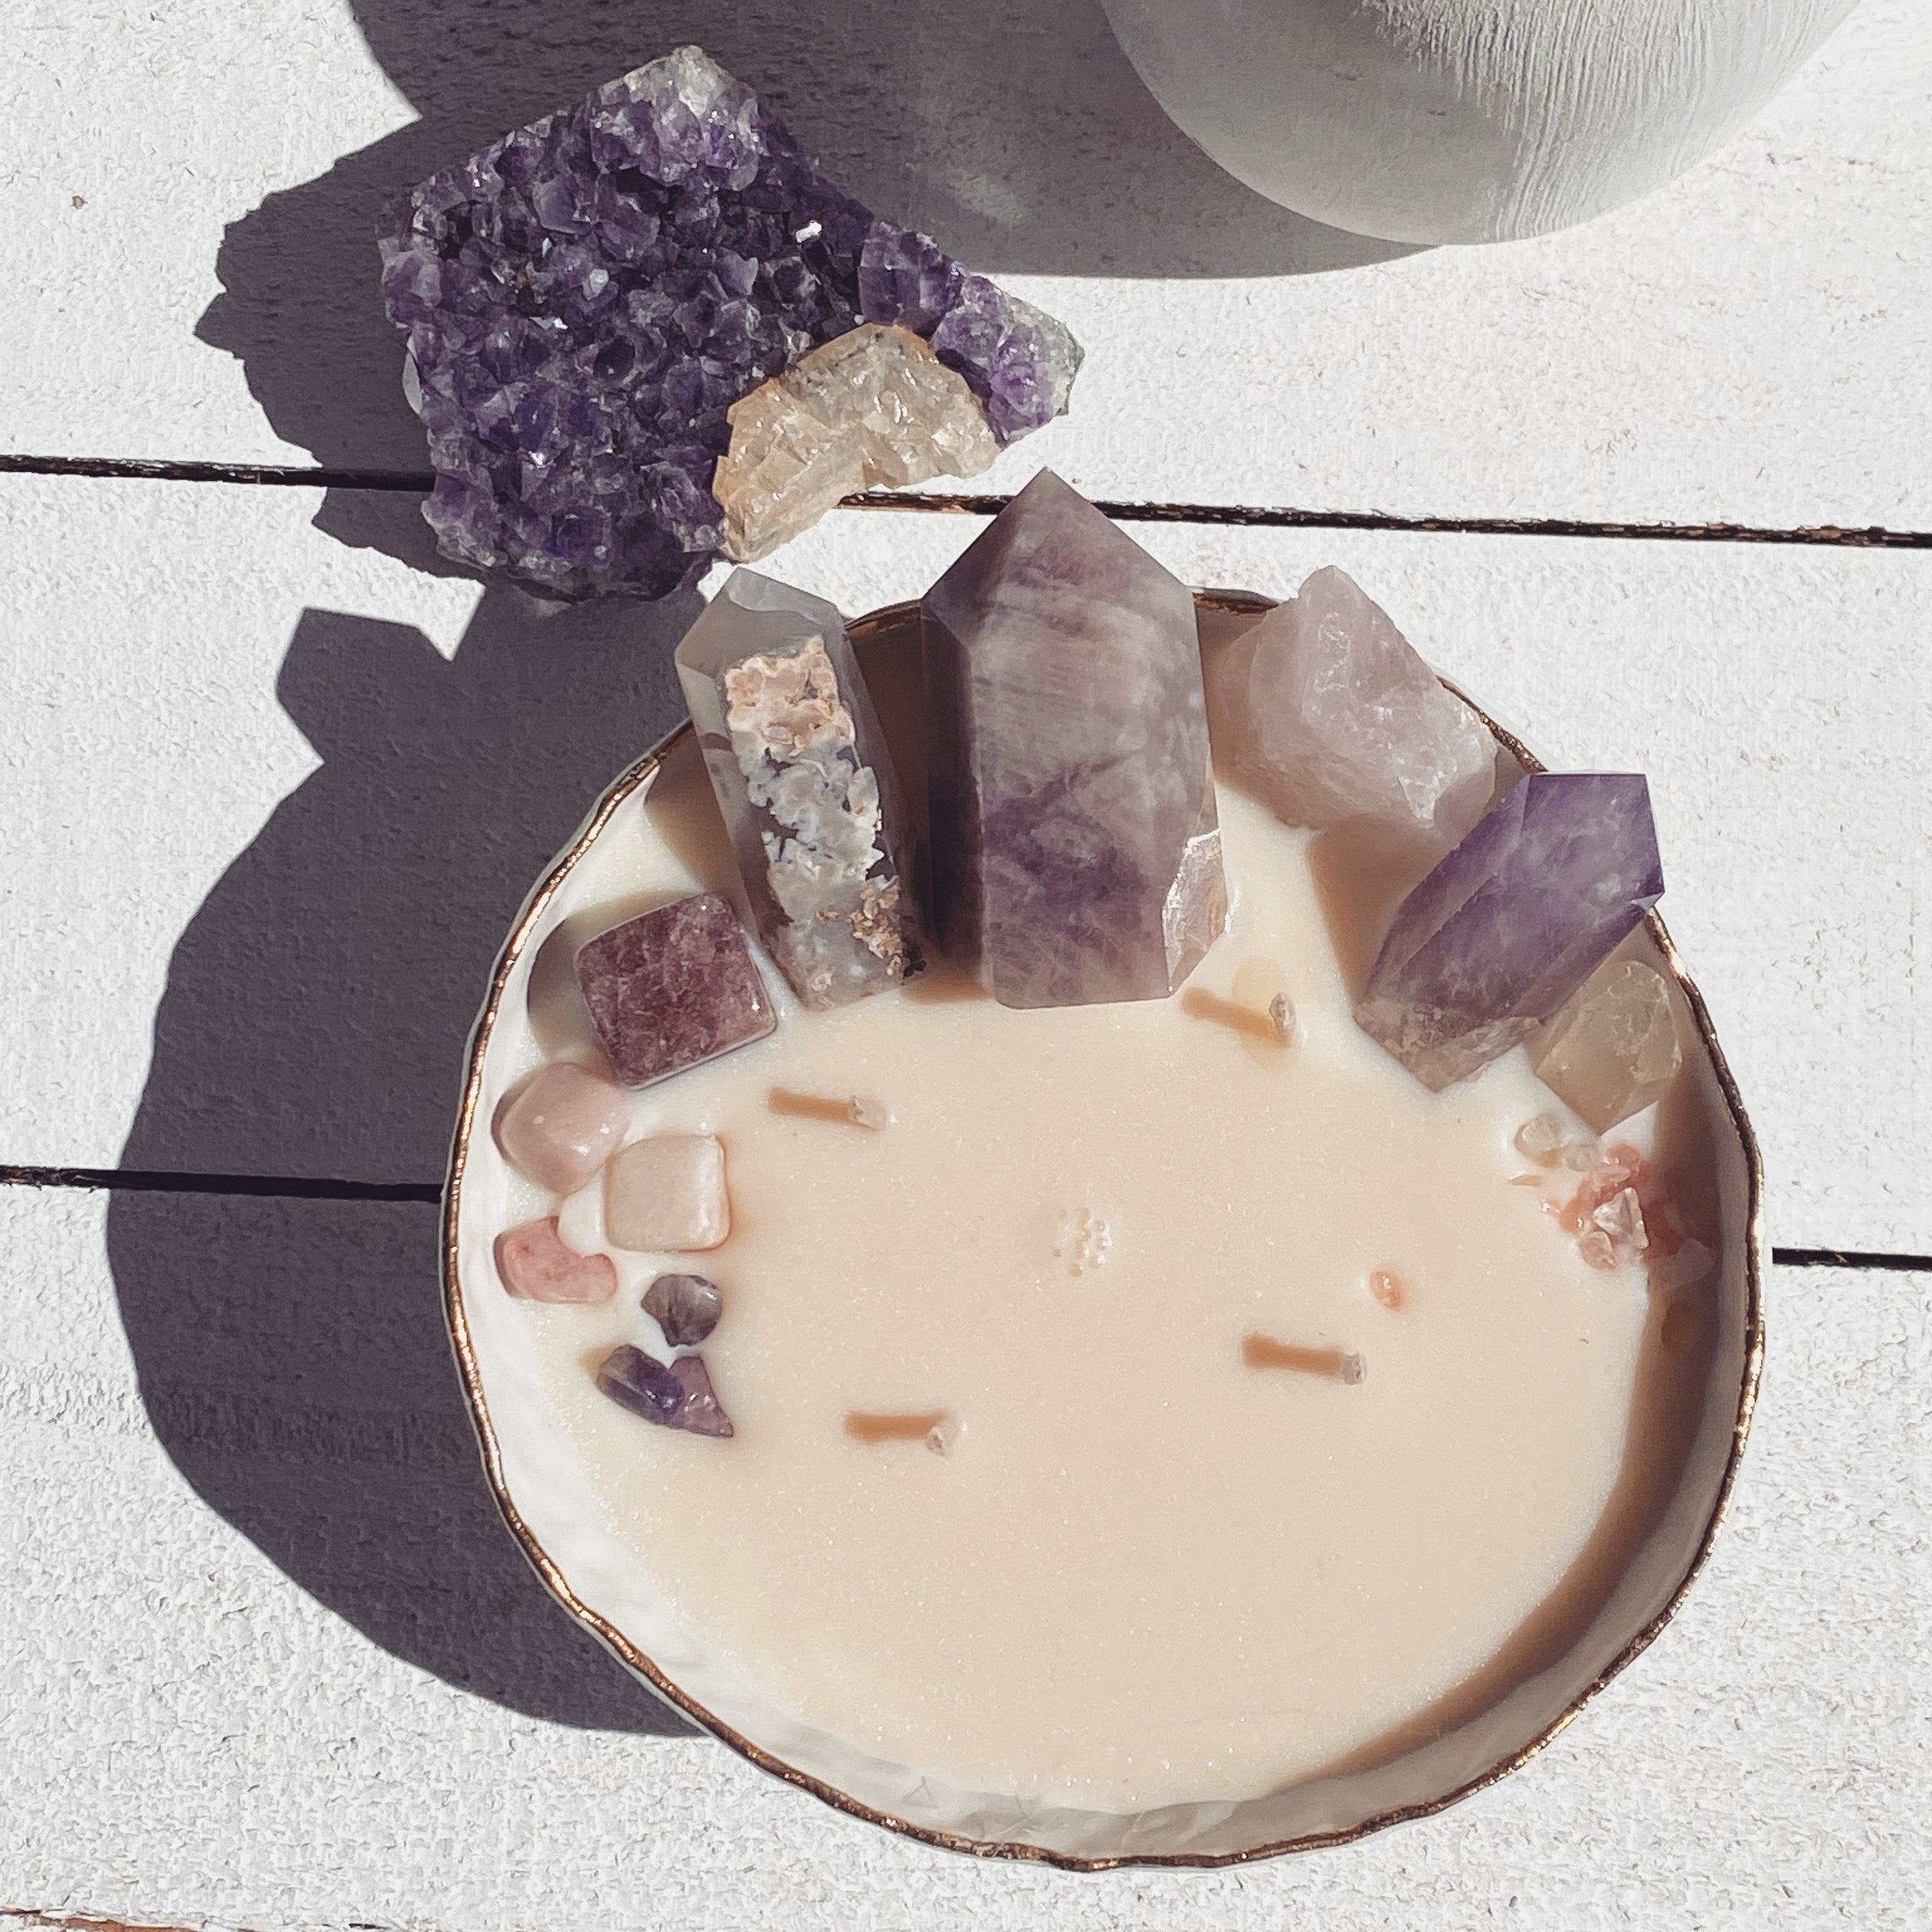 love + positivity | ceramic crystal candle bowl 1:1